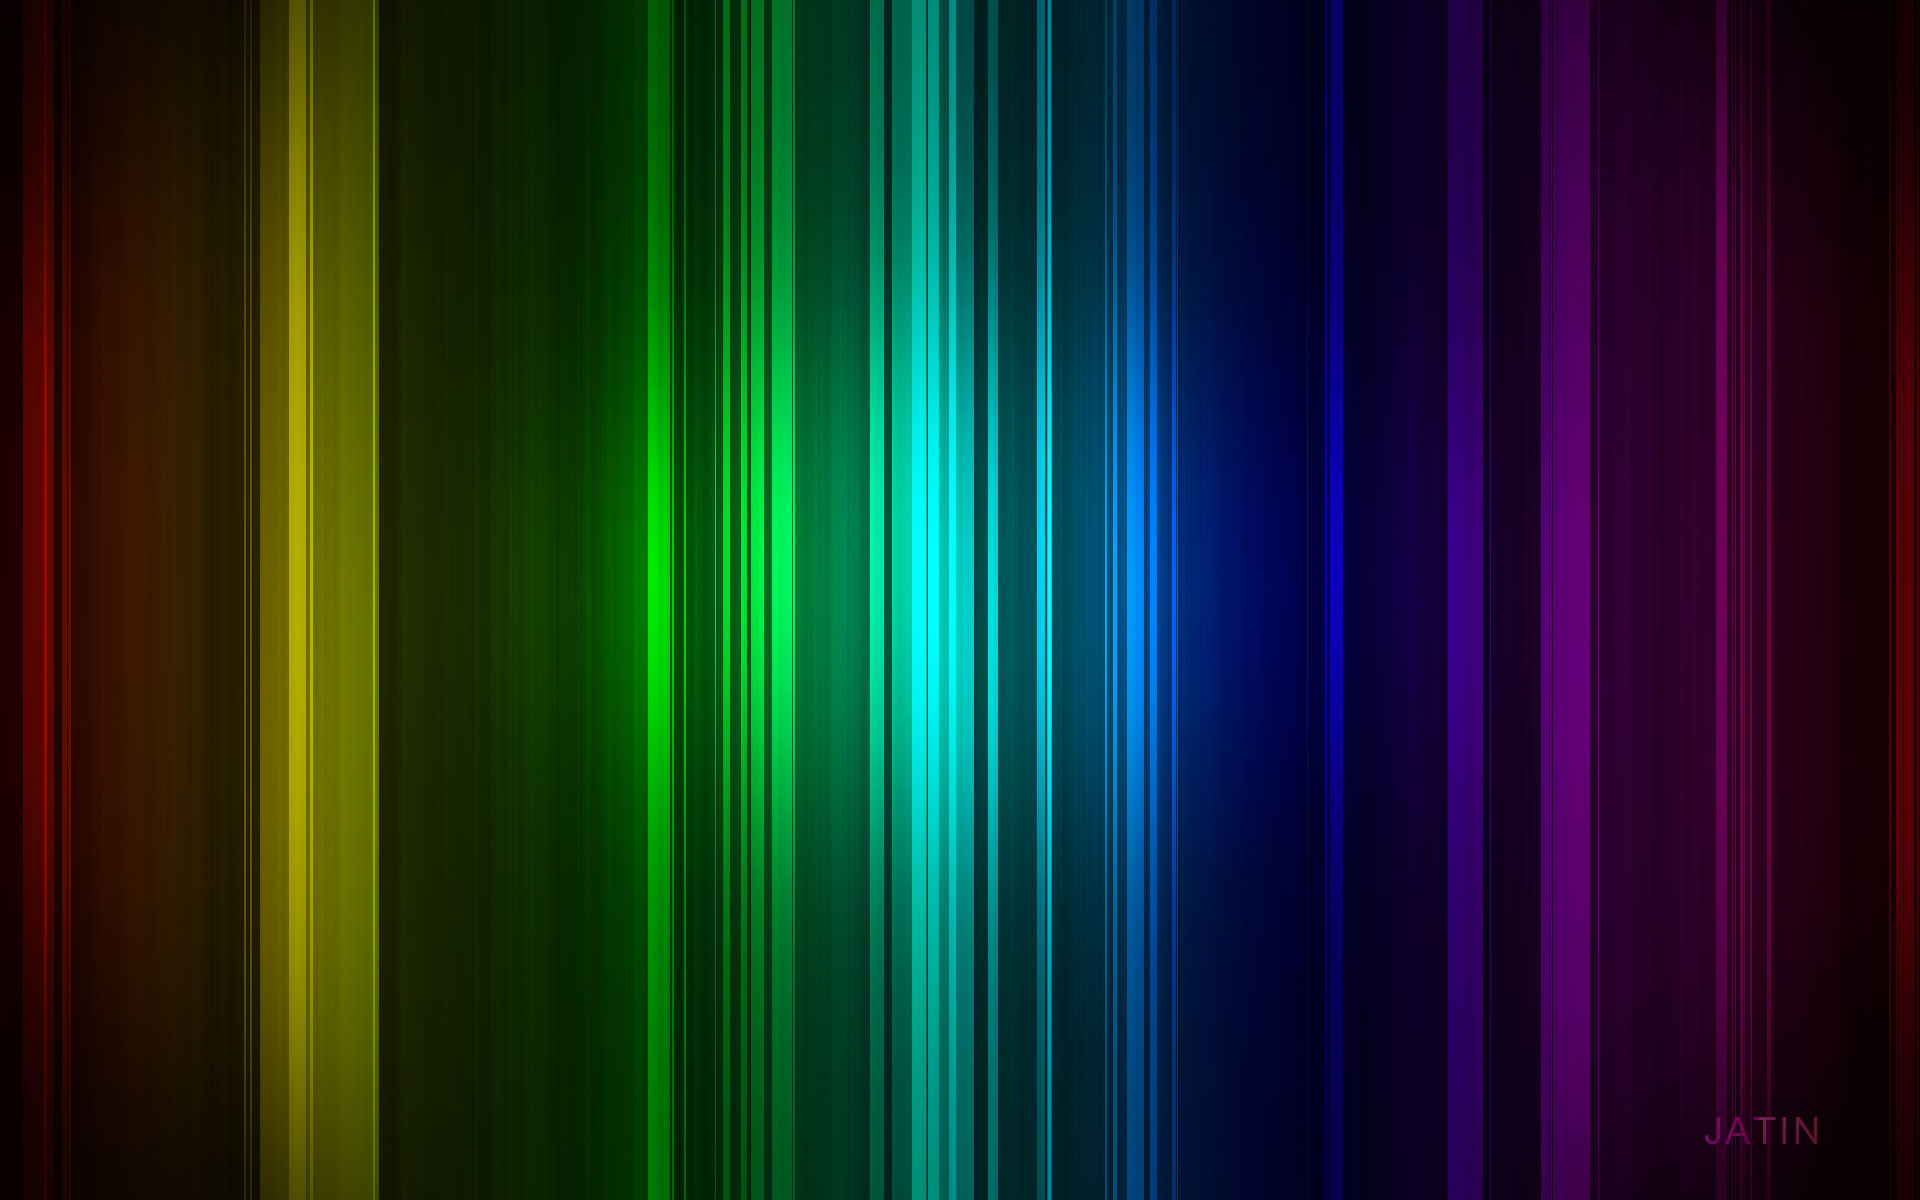 jatin name wallpaper,green,blue,light,violet,purple